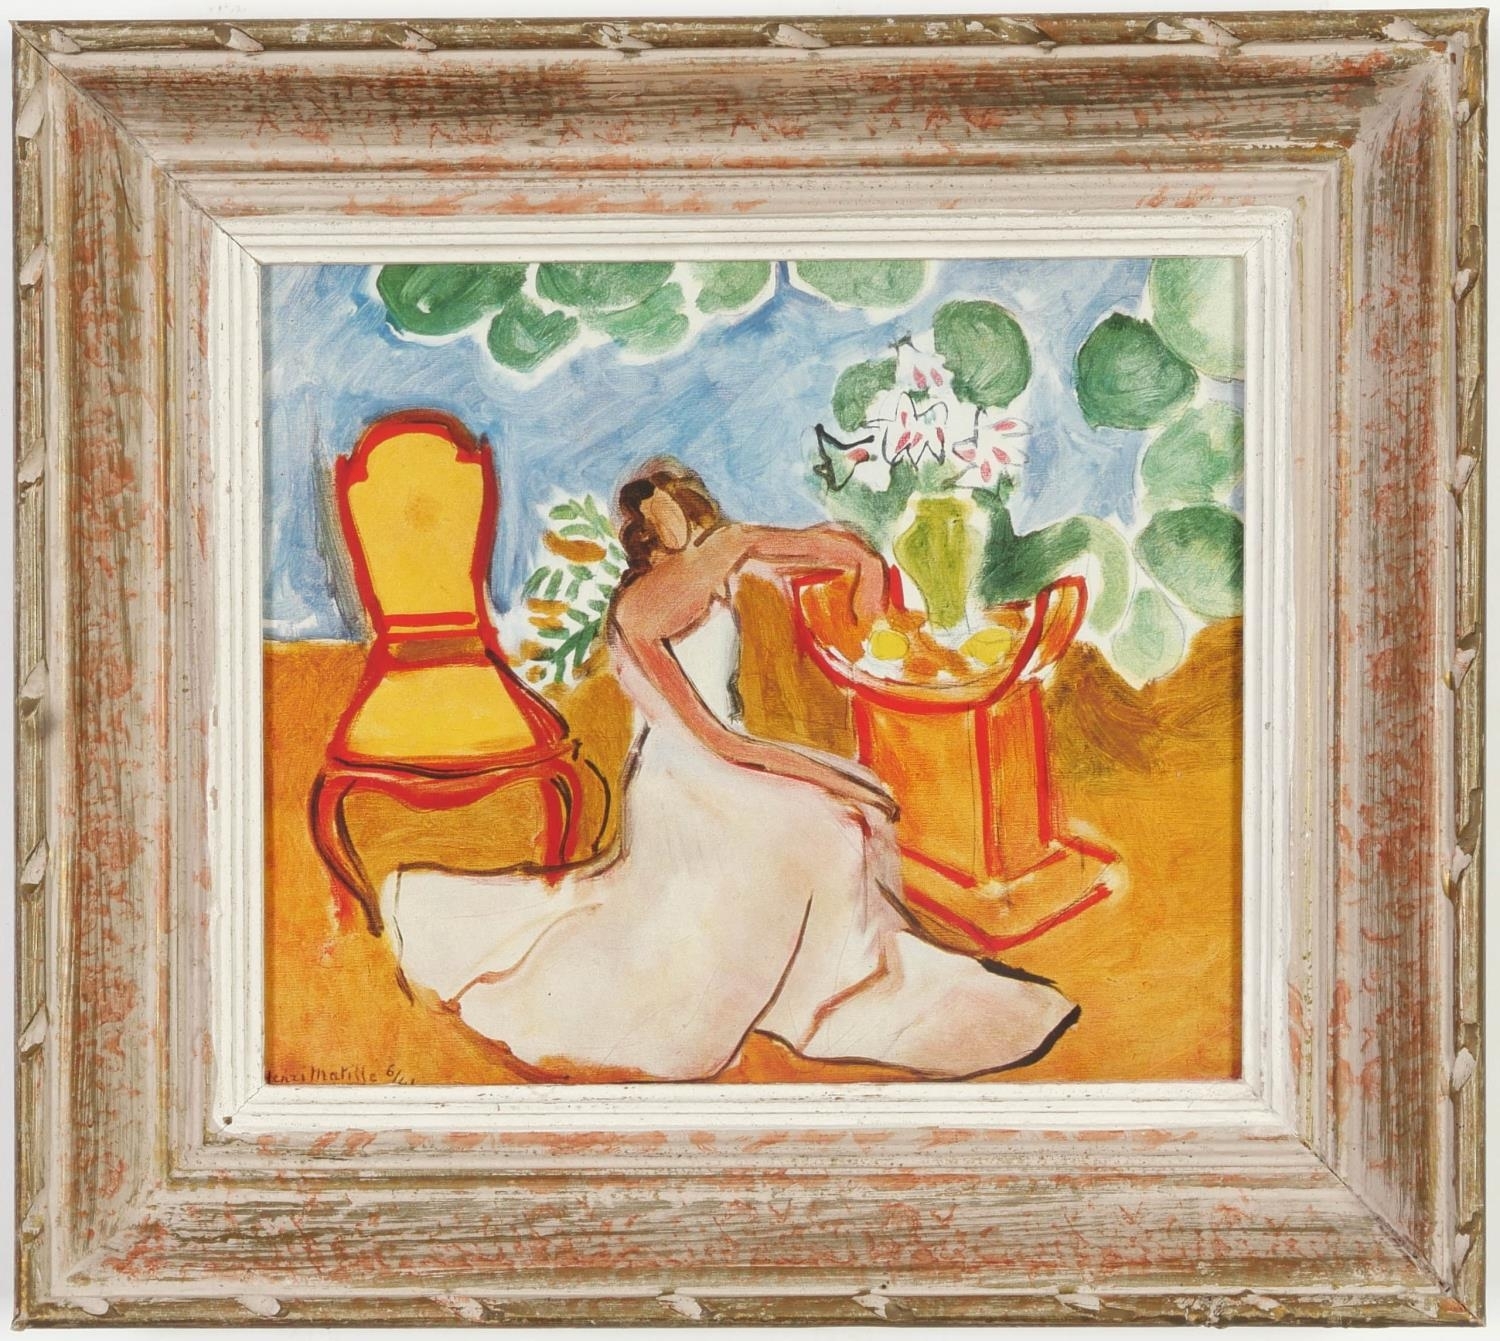 Artwork by Henri Matisse, Femme en robe blanche, Made of lithograph